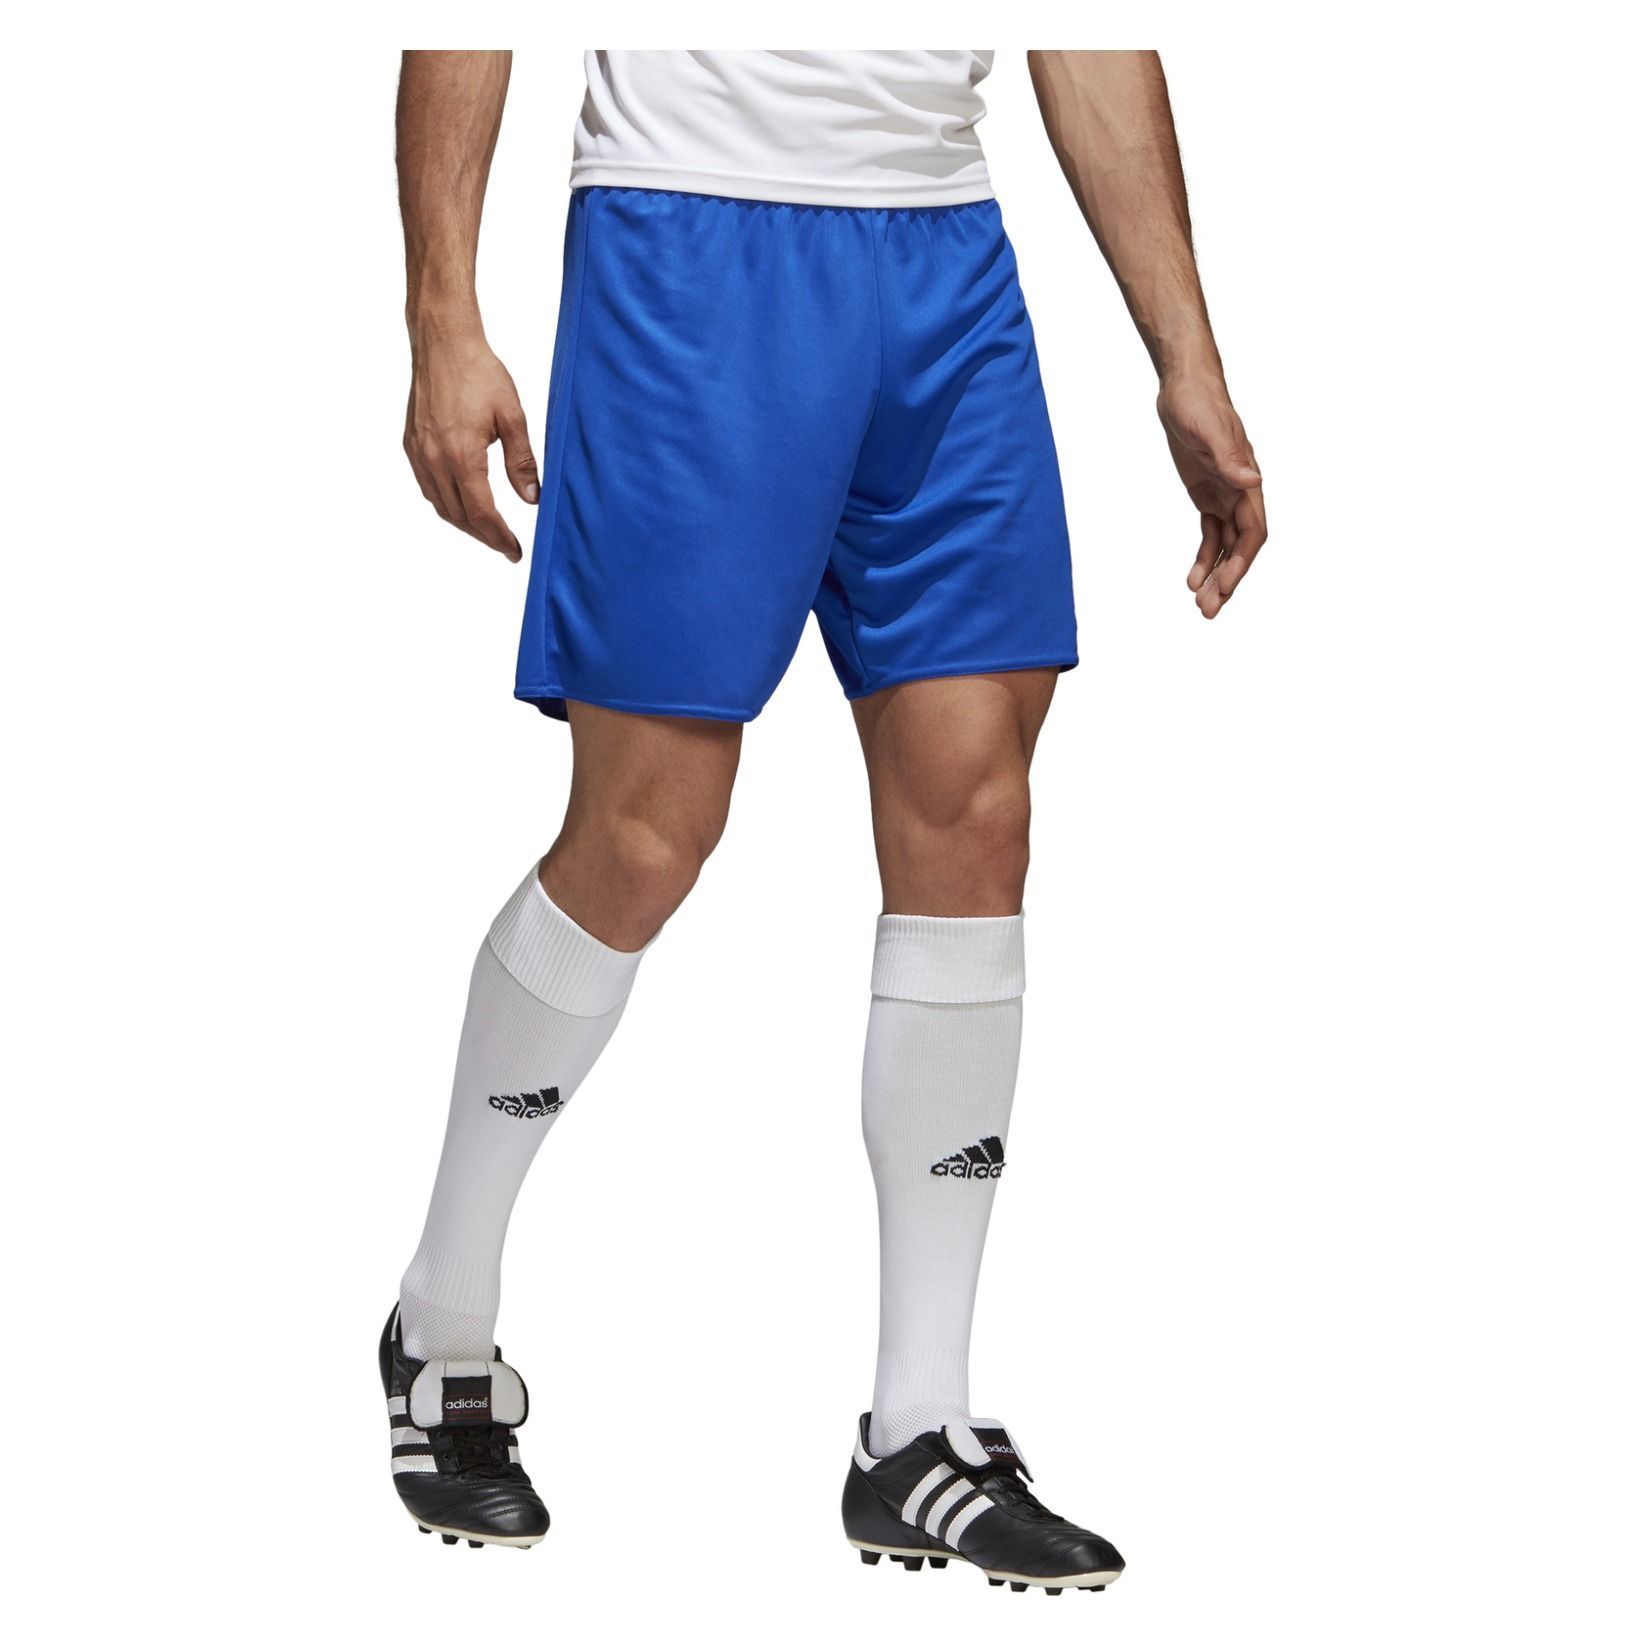 adidas Parma 16 Shorts With Briefs - Kitlocker.com